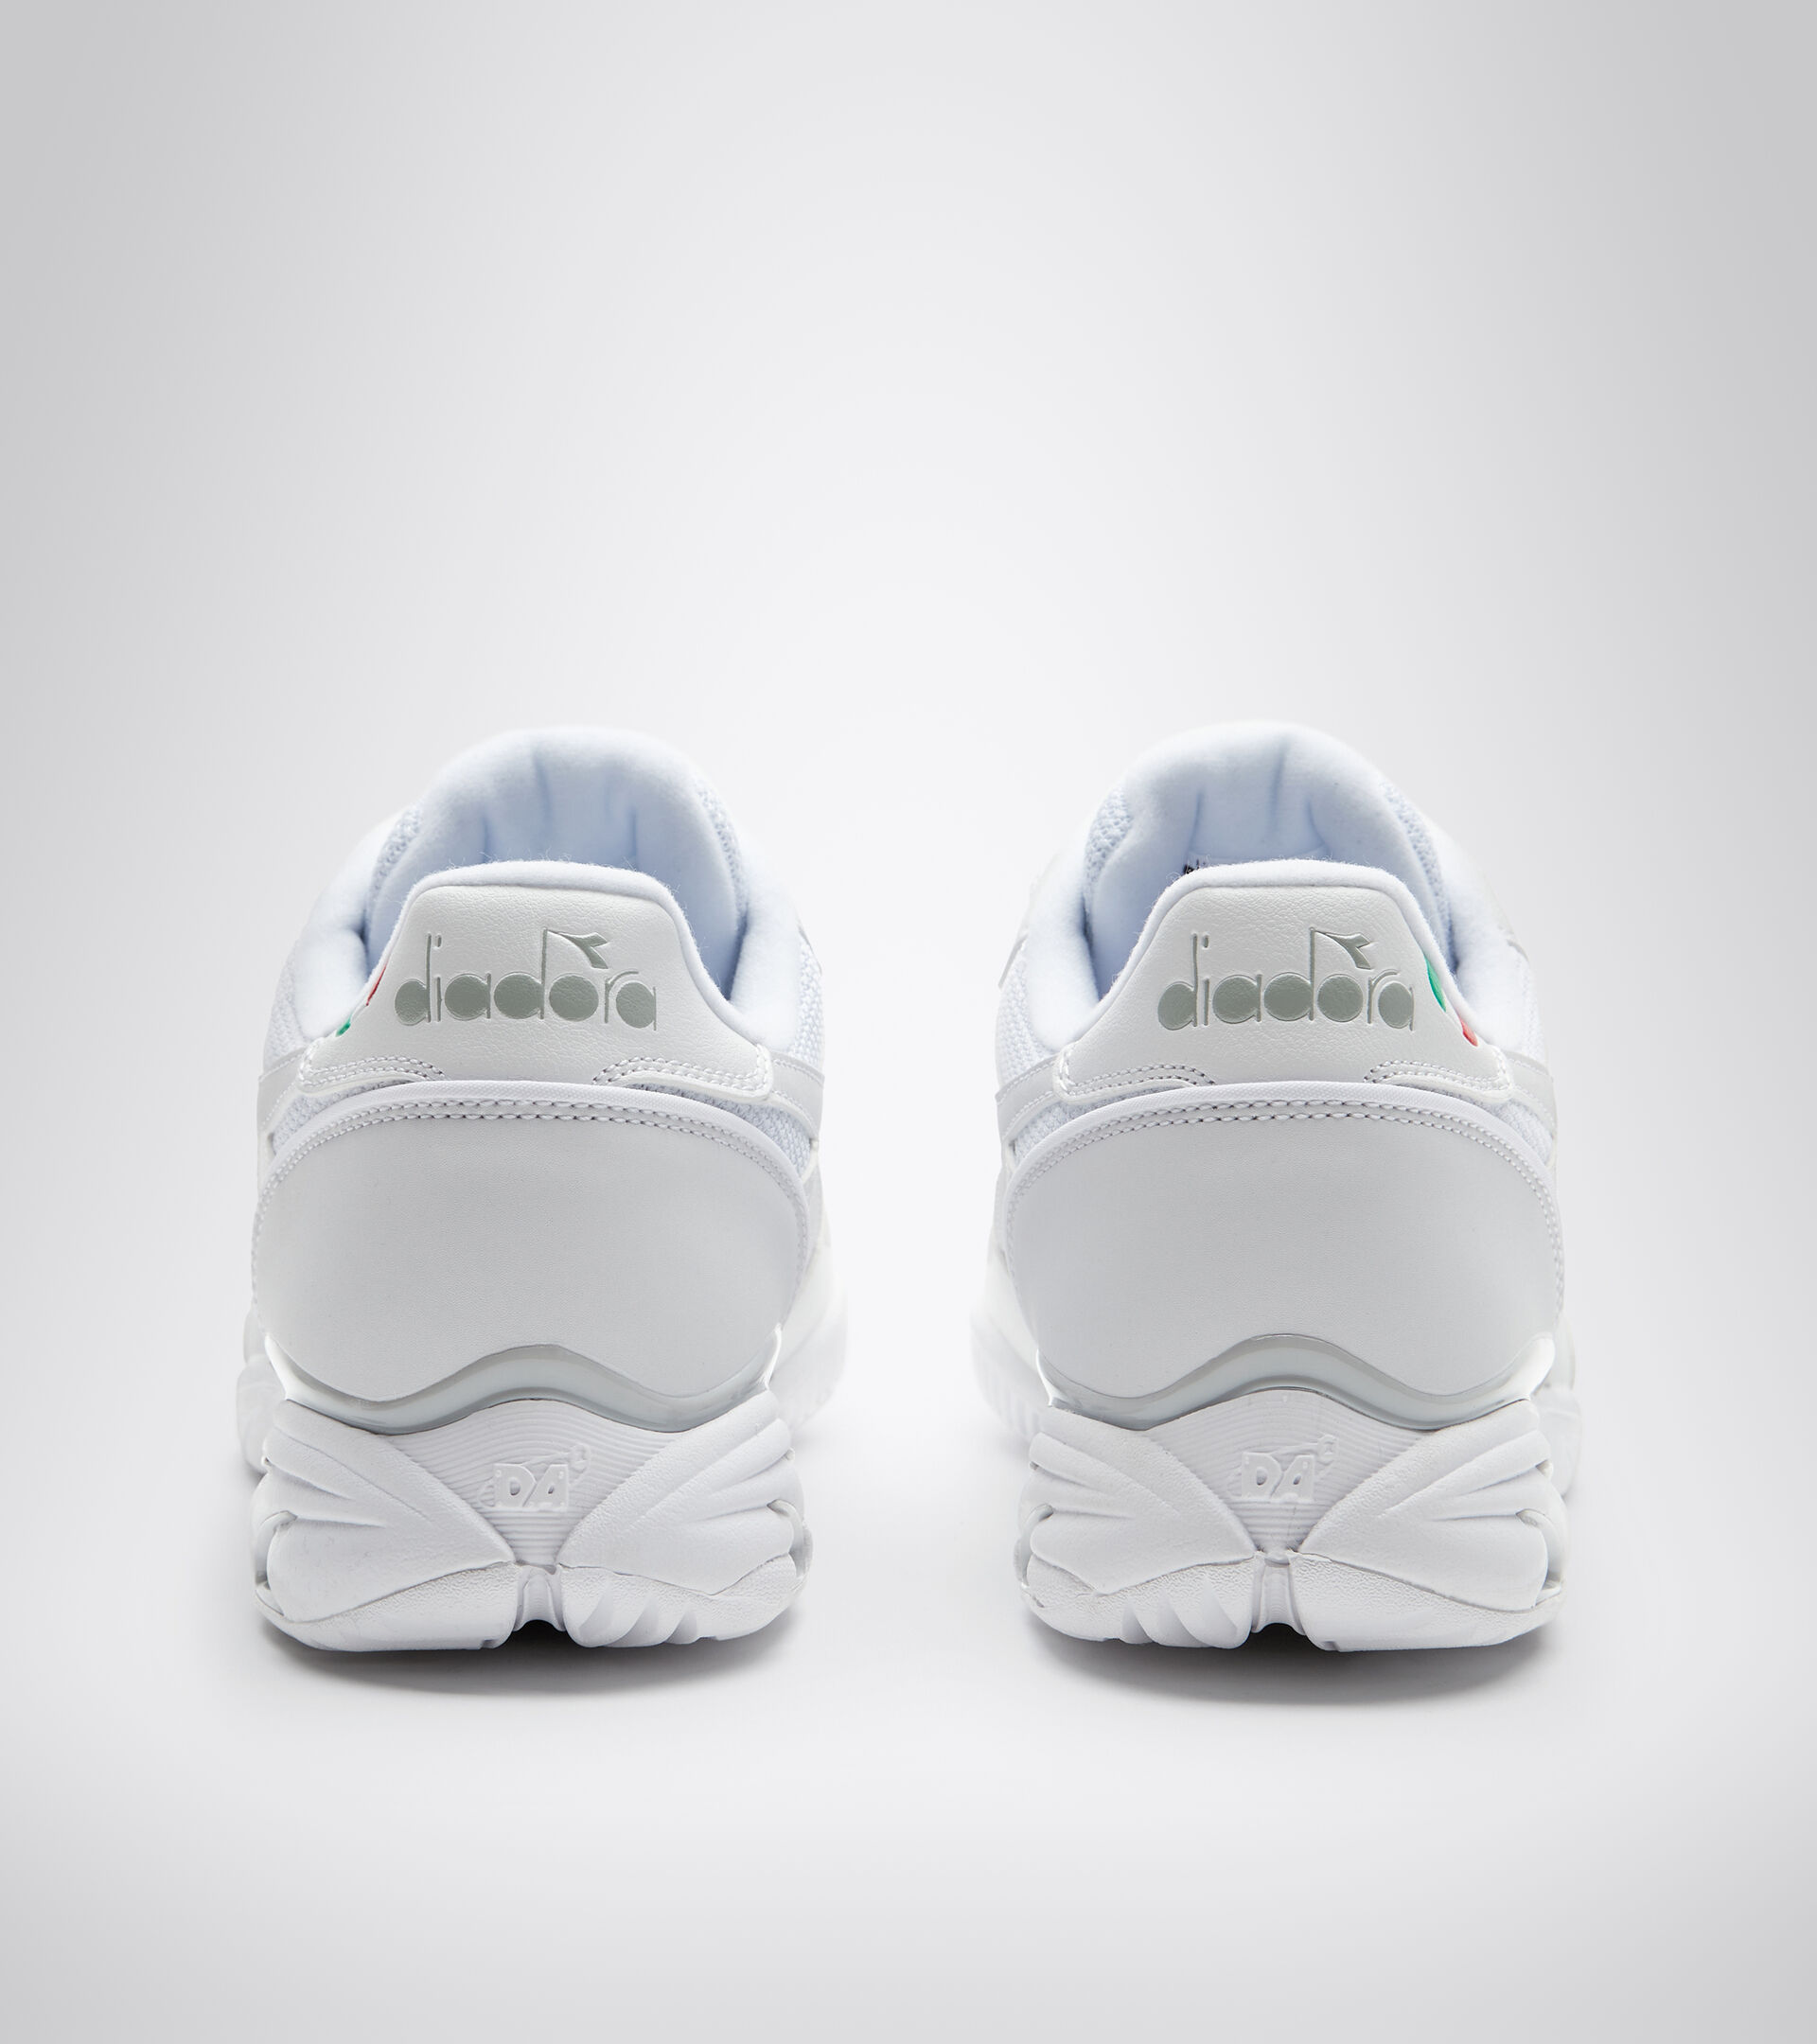 Tennis shoes for hard surfaces and/or clay - Men's S.STAR MAVERICK AG WHITE/WHITE/WHITE - Diadora